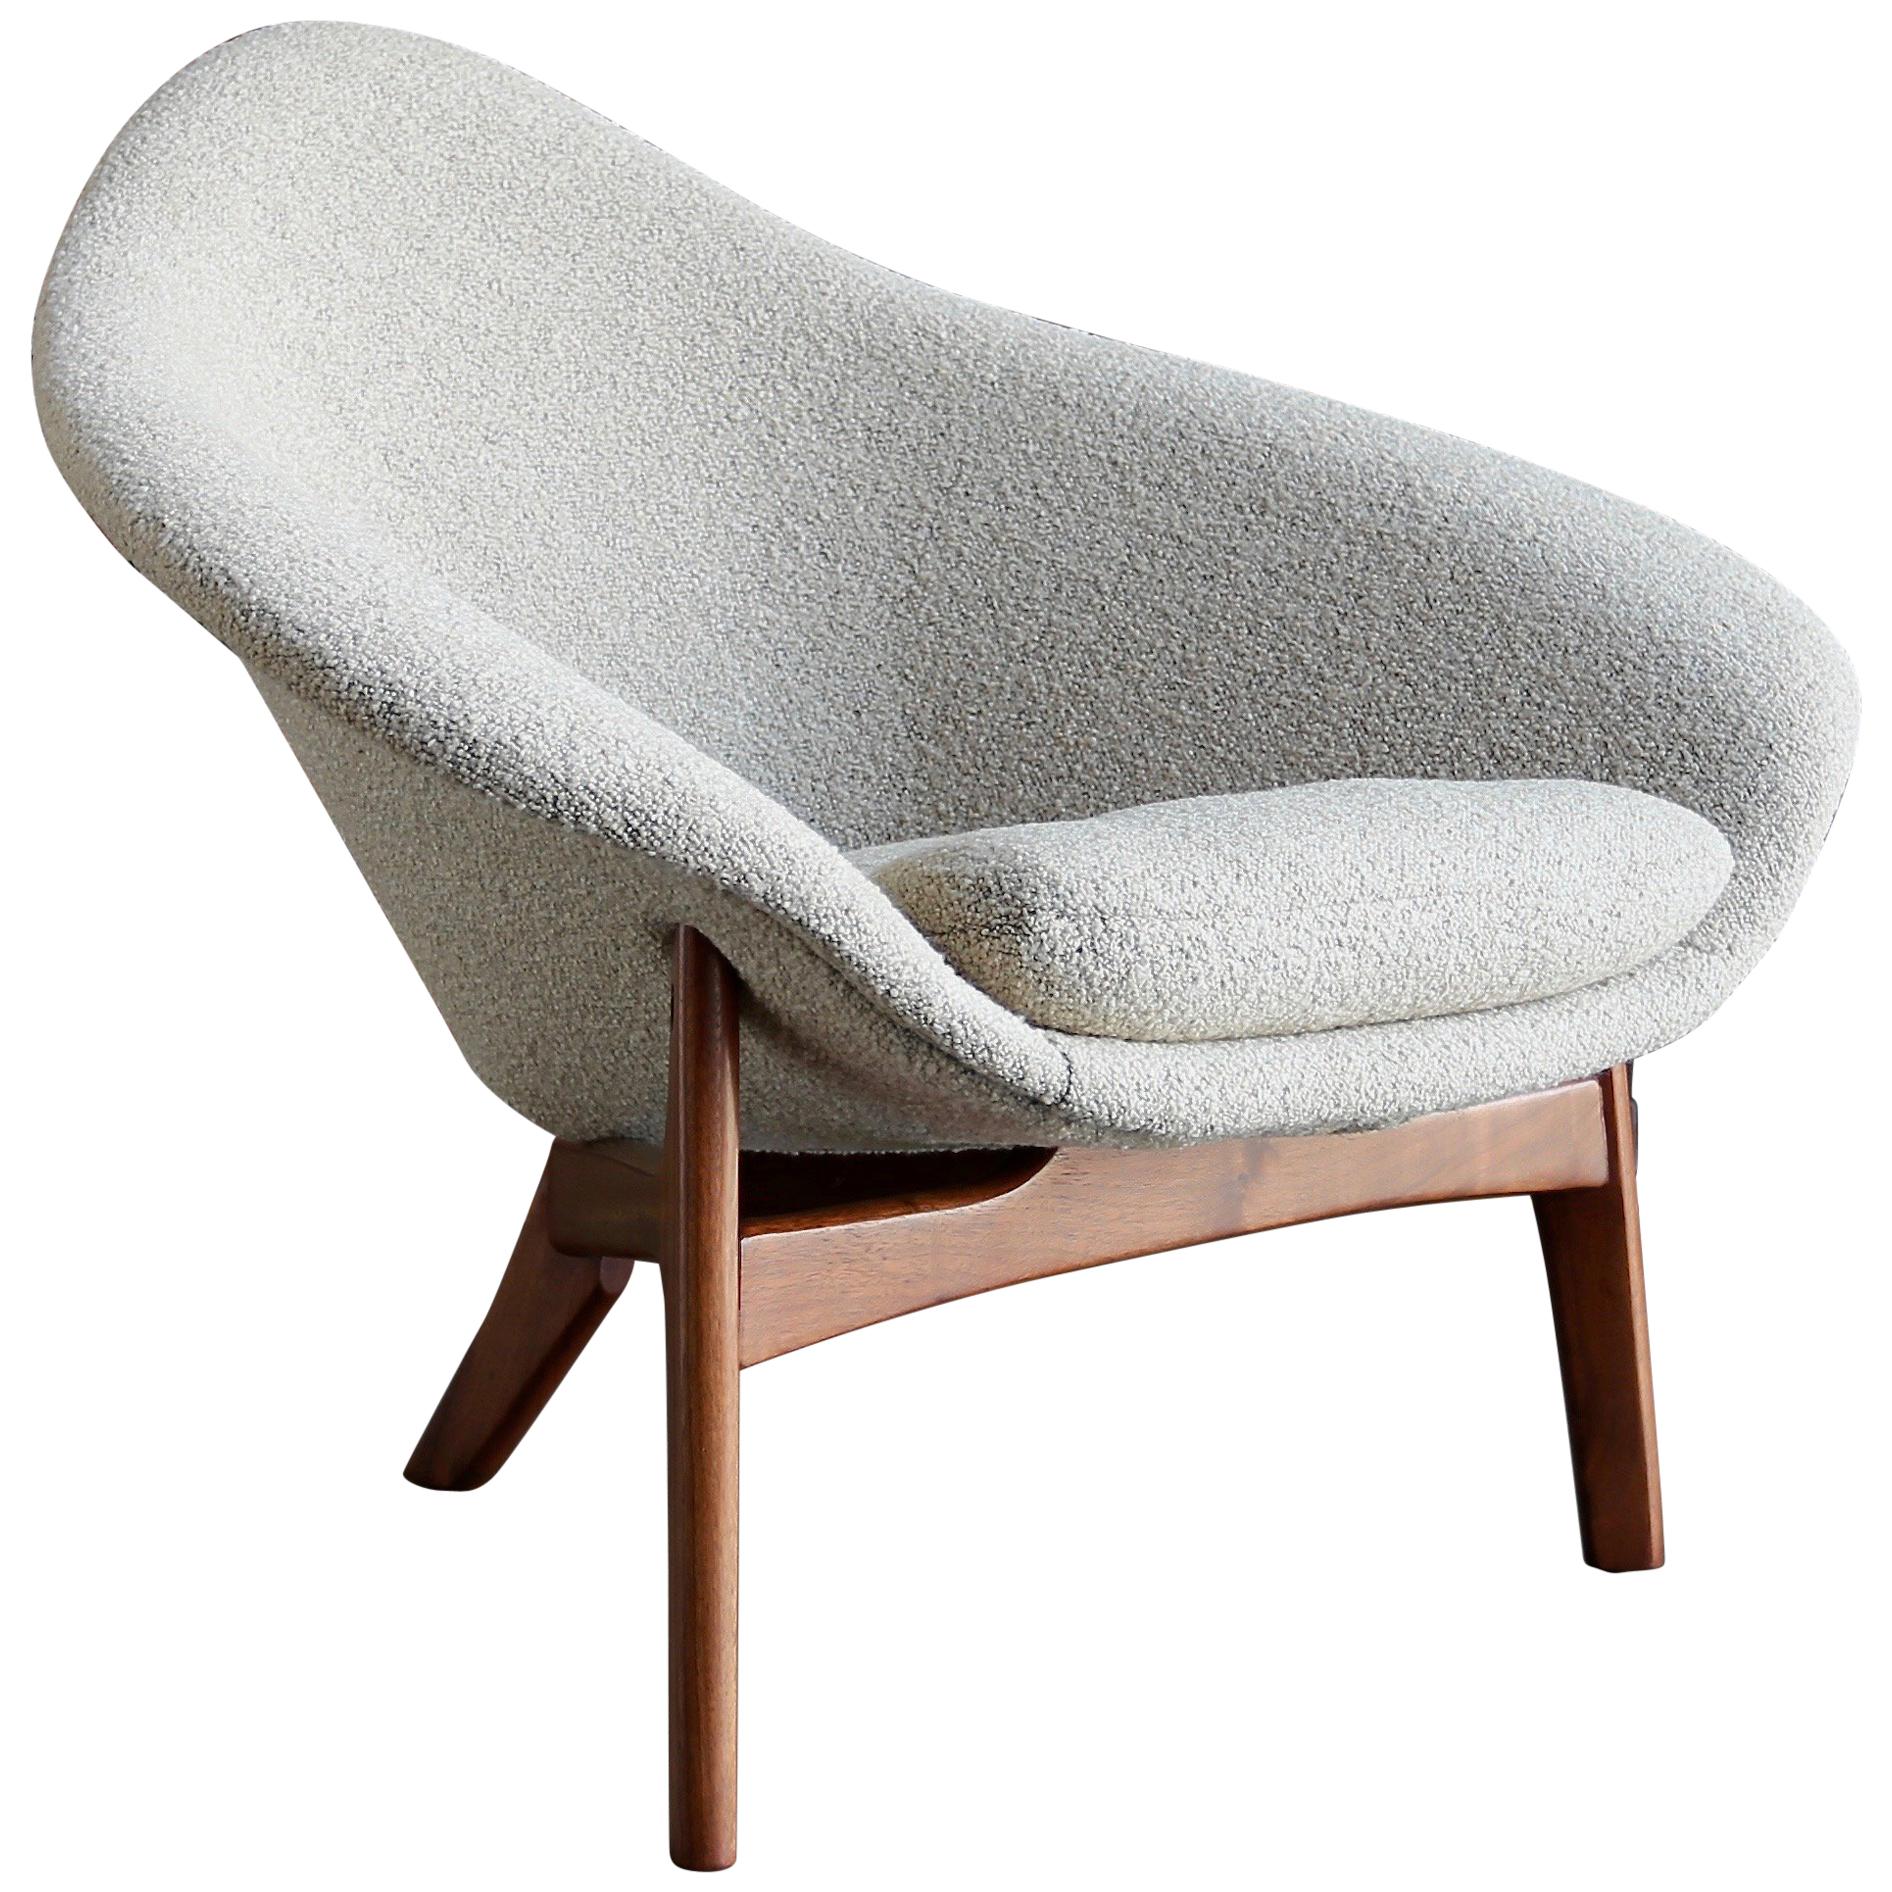 Rare Adrian Pearsall "Coconut" Chair